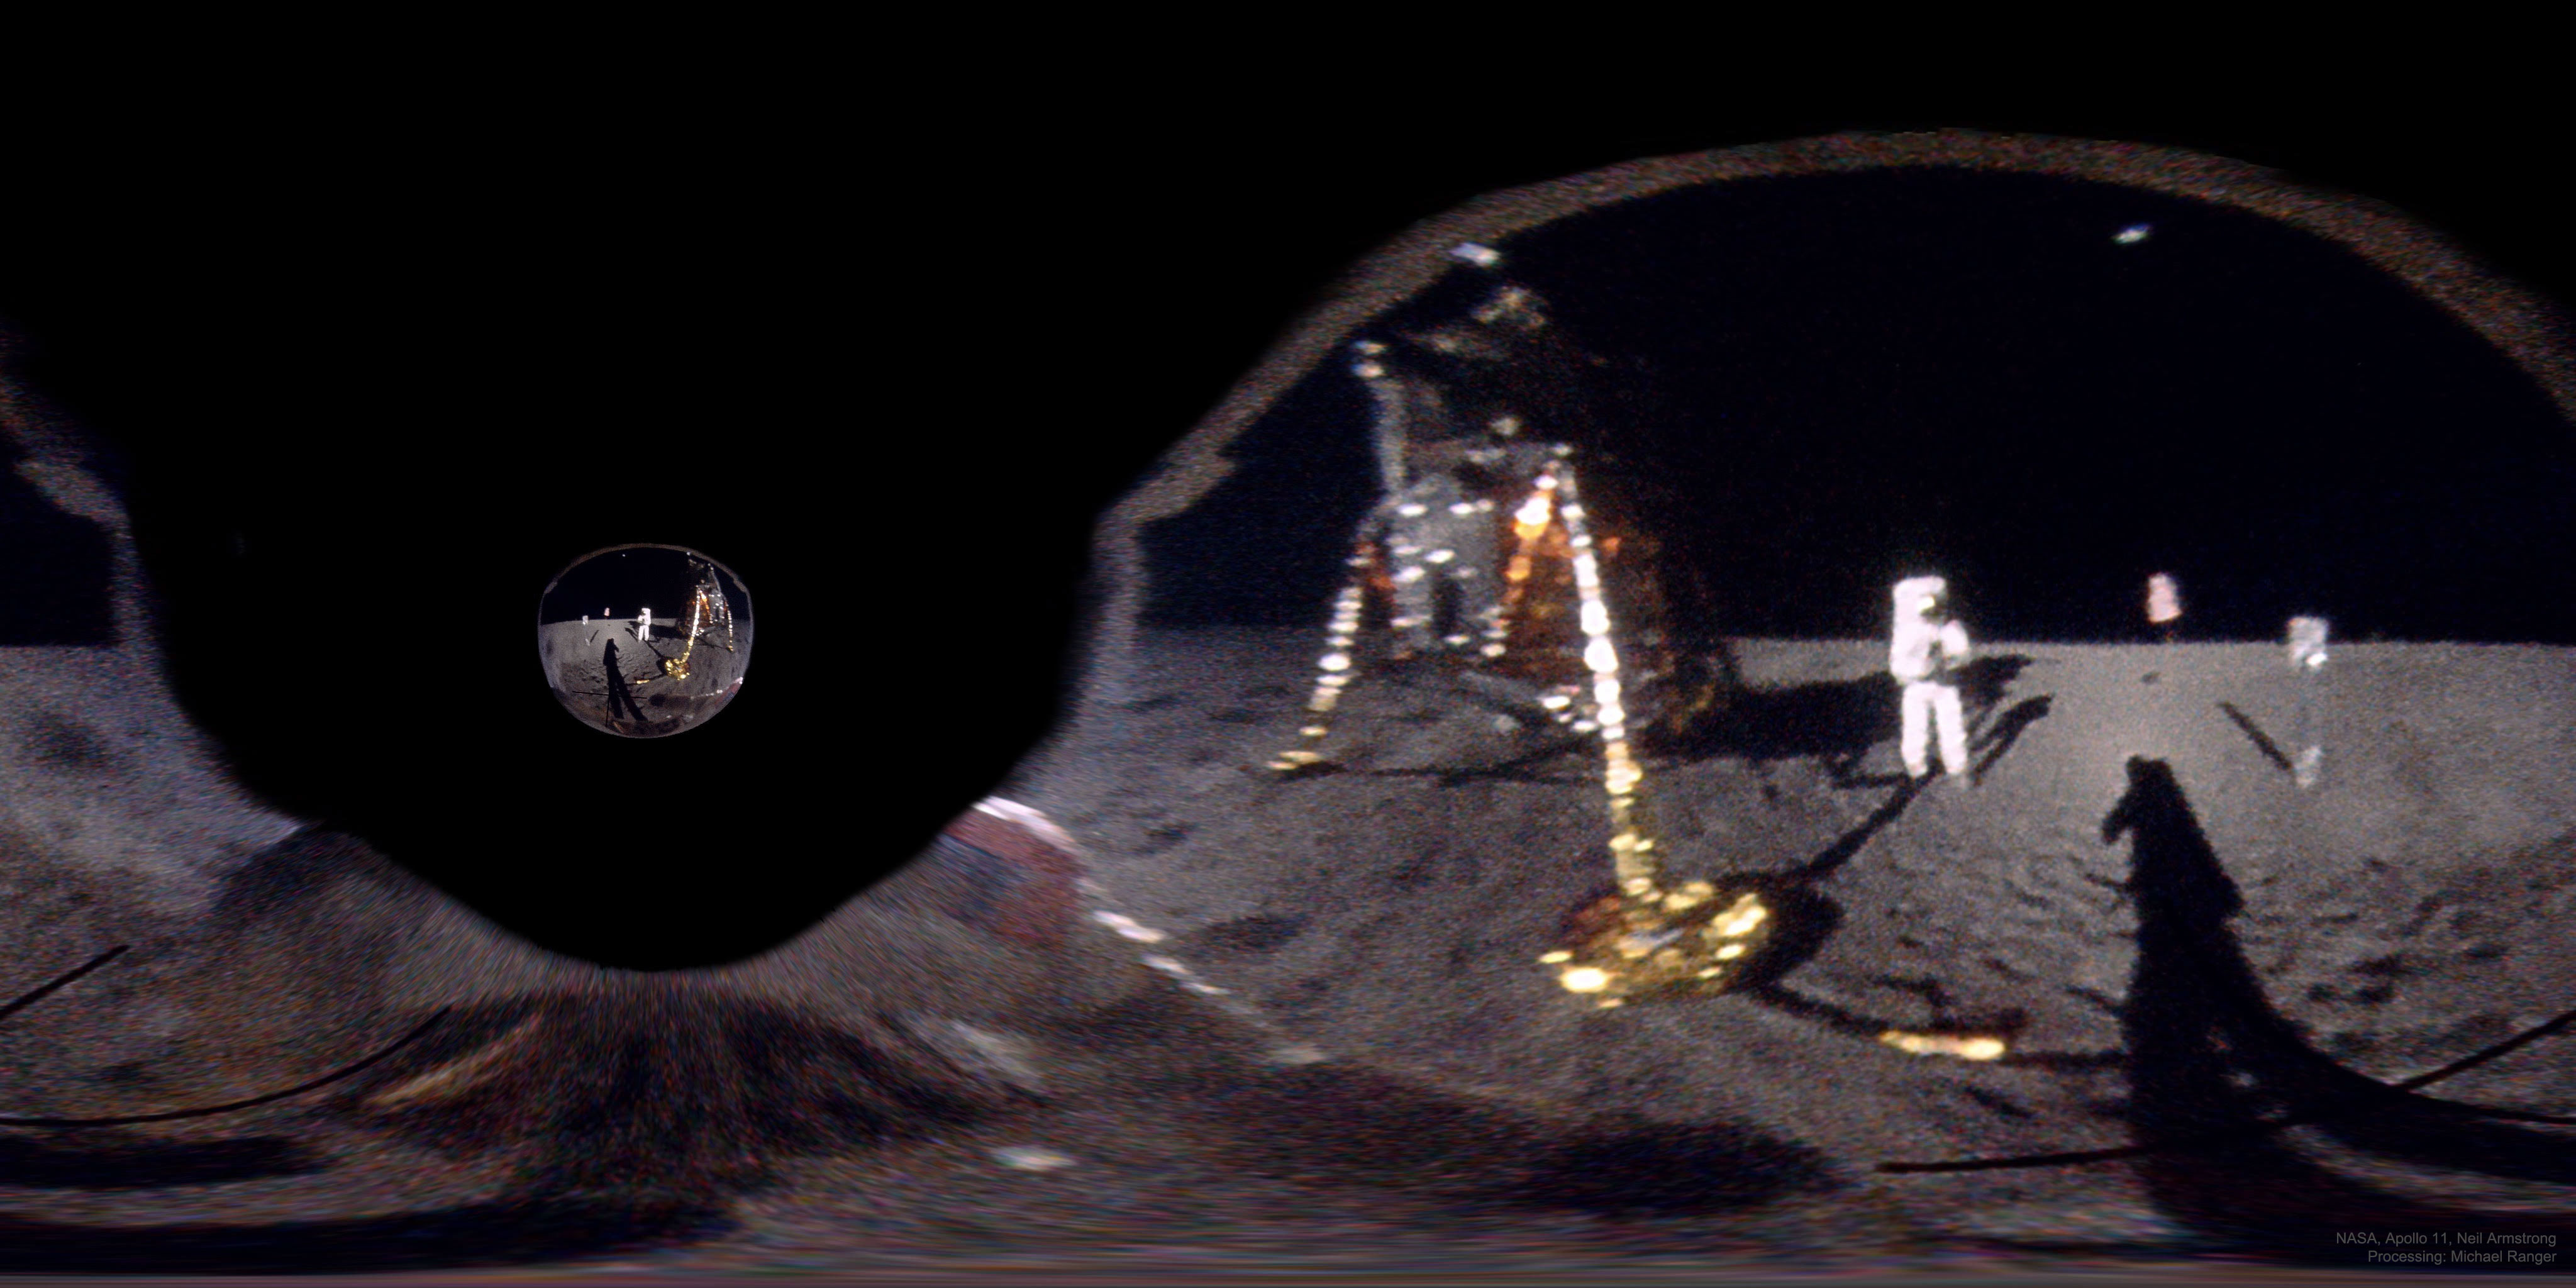 Нил армстронг на луне фото